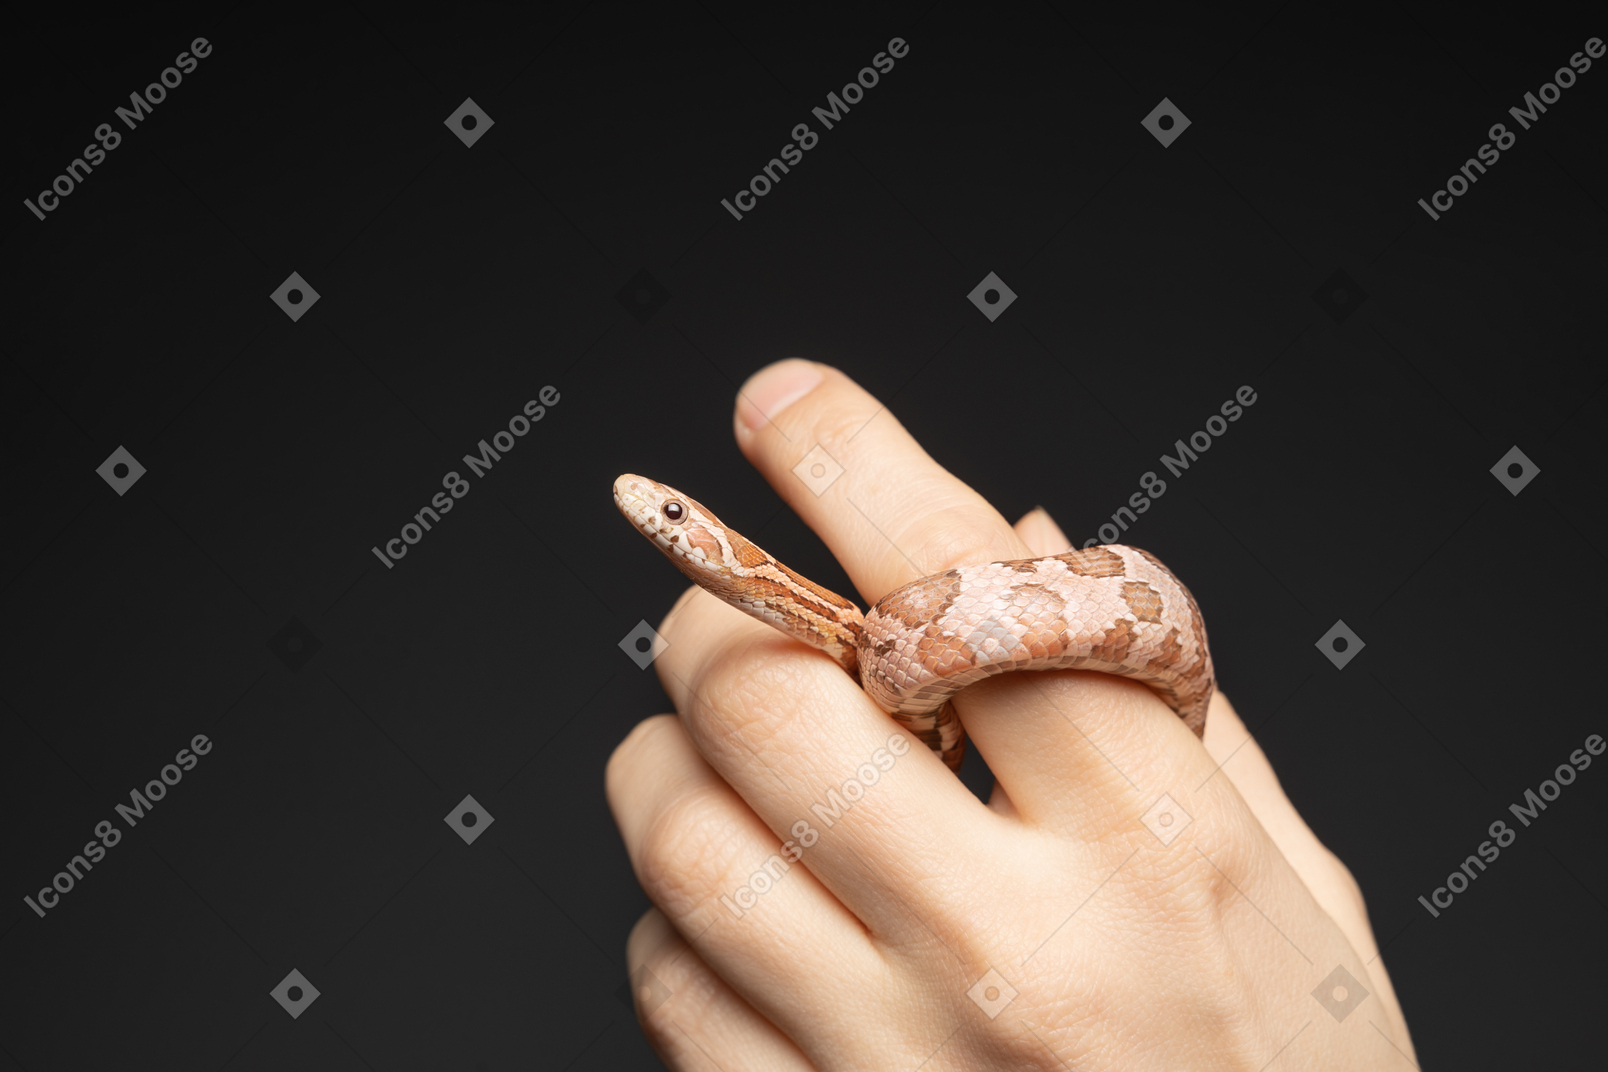 Little corn snake curving around human finger